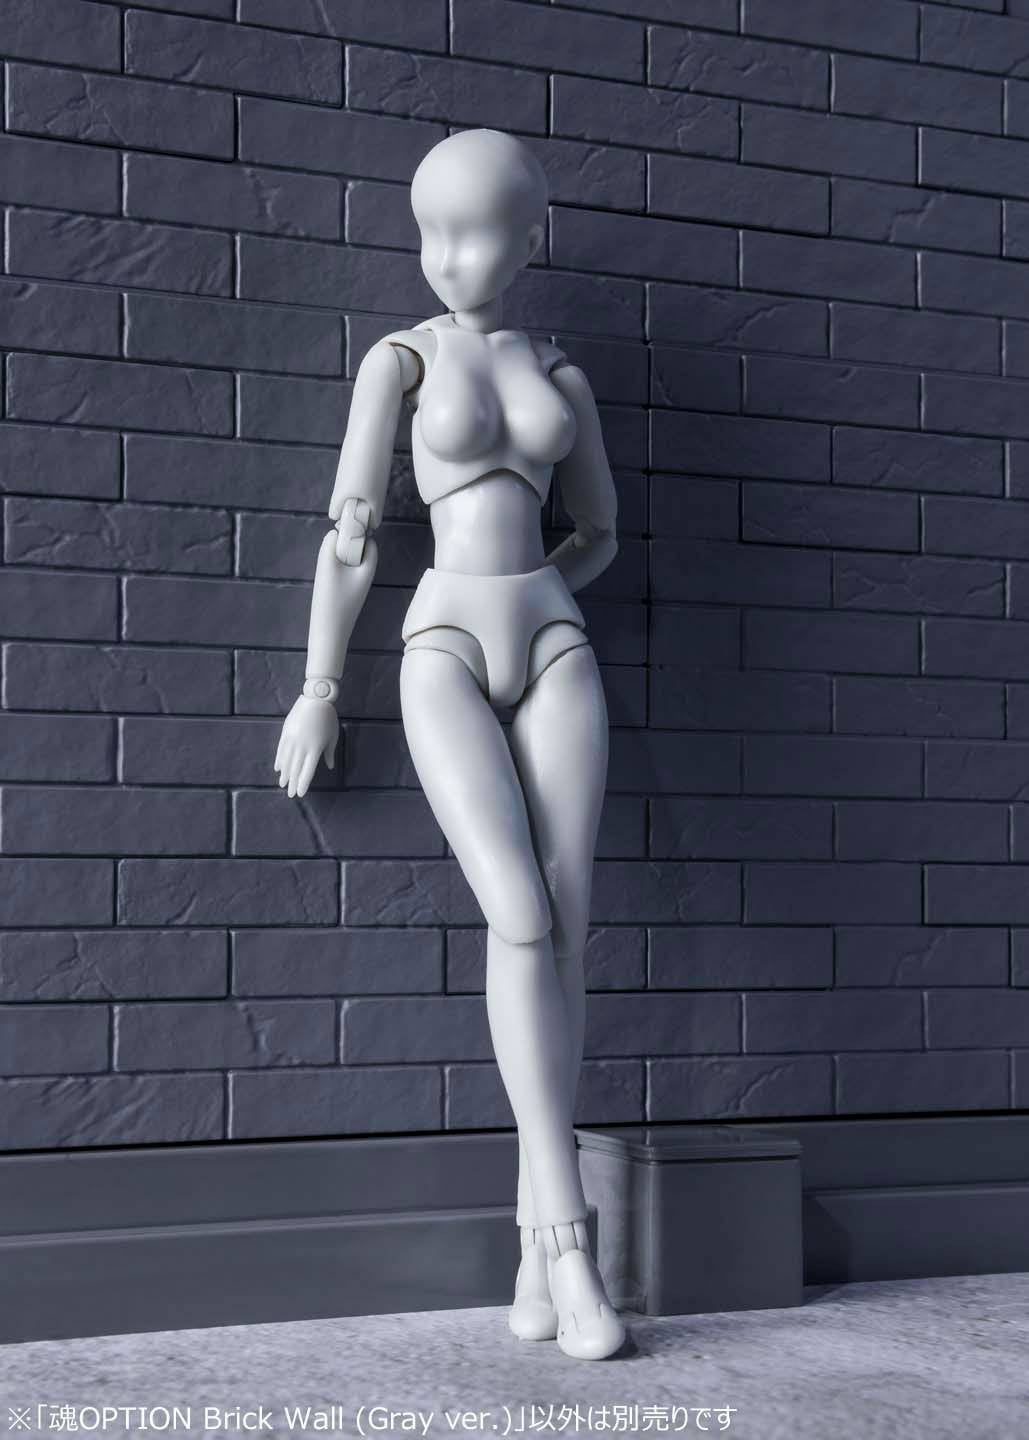 Tamashii Option Action Figure Accessory Brick Wall (Gray Ver.) 22 cm